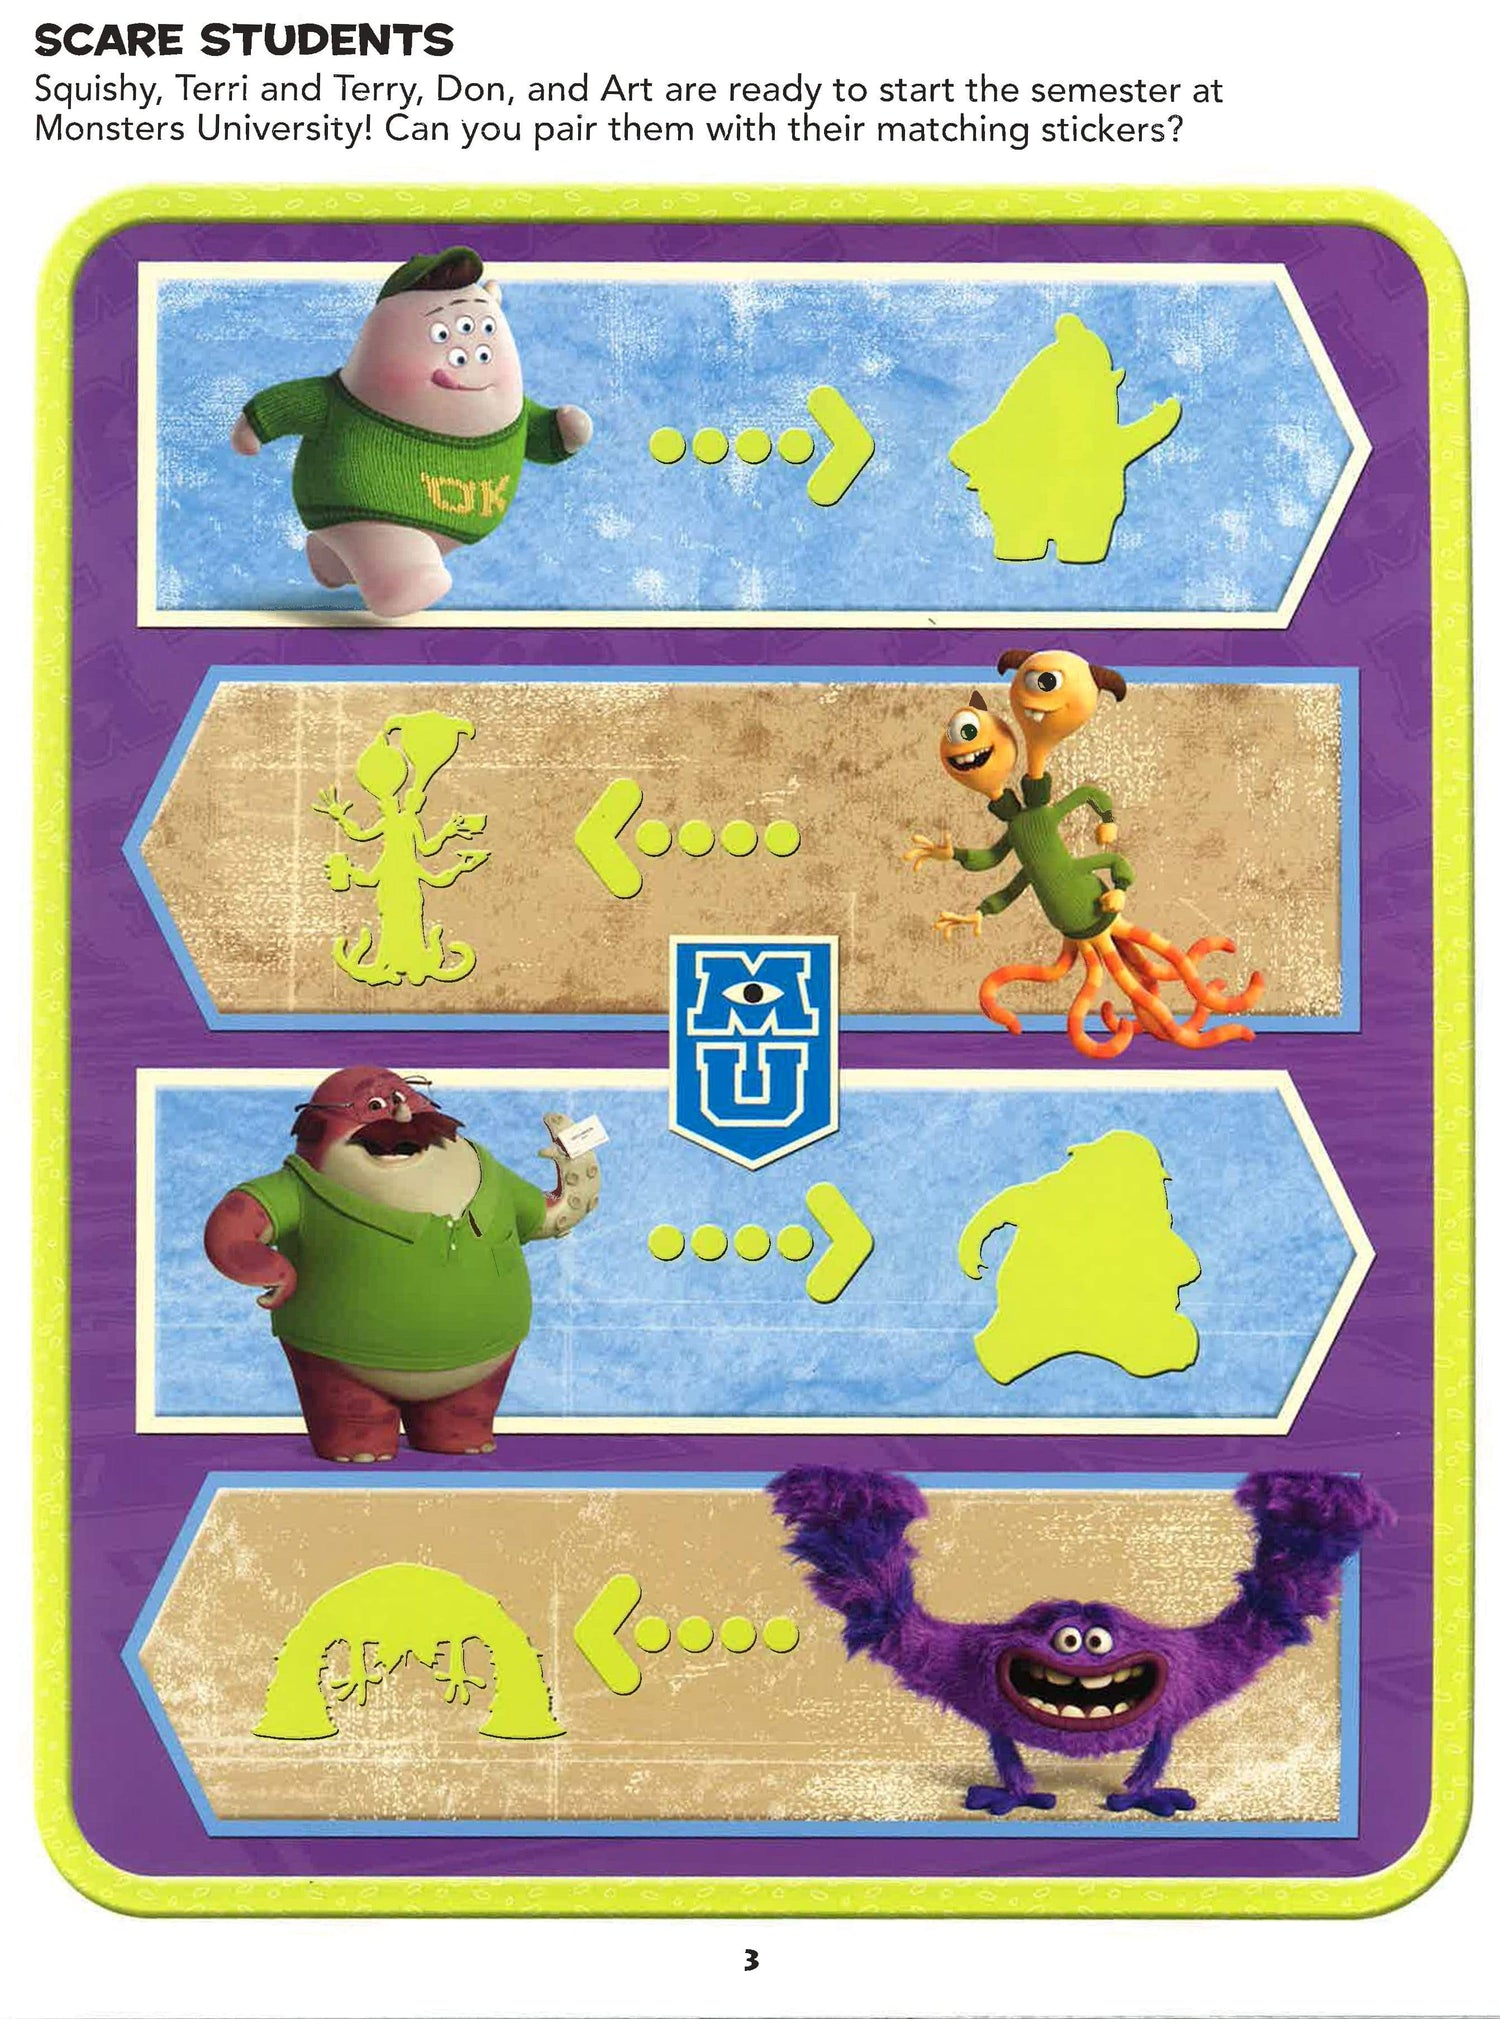 Disney And Pixar Monsters Inc Sticker Book Treasury